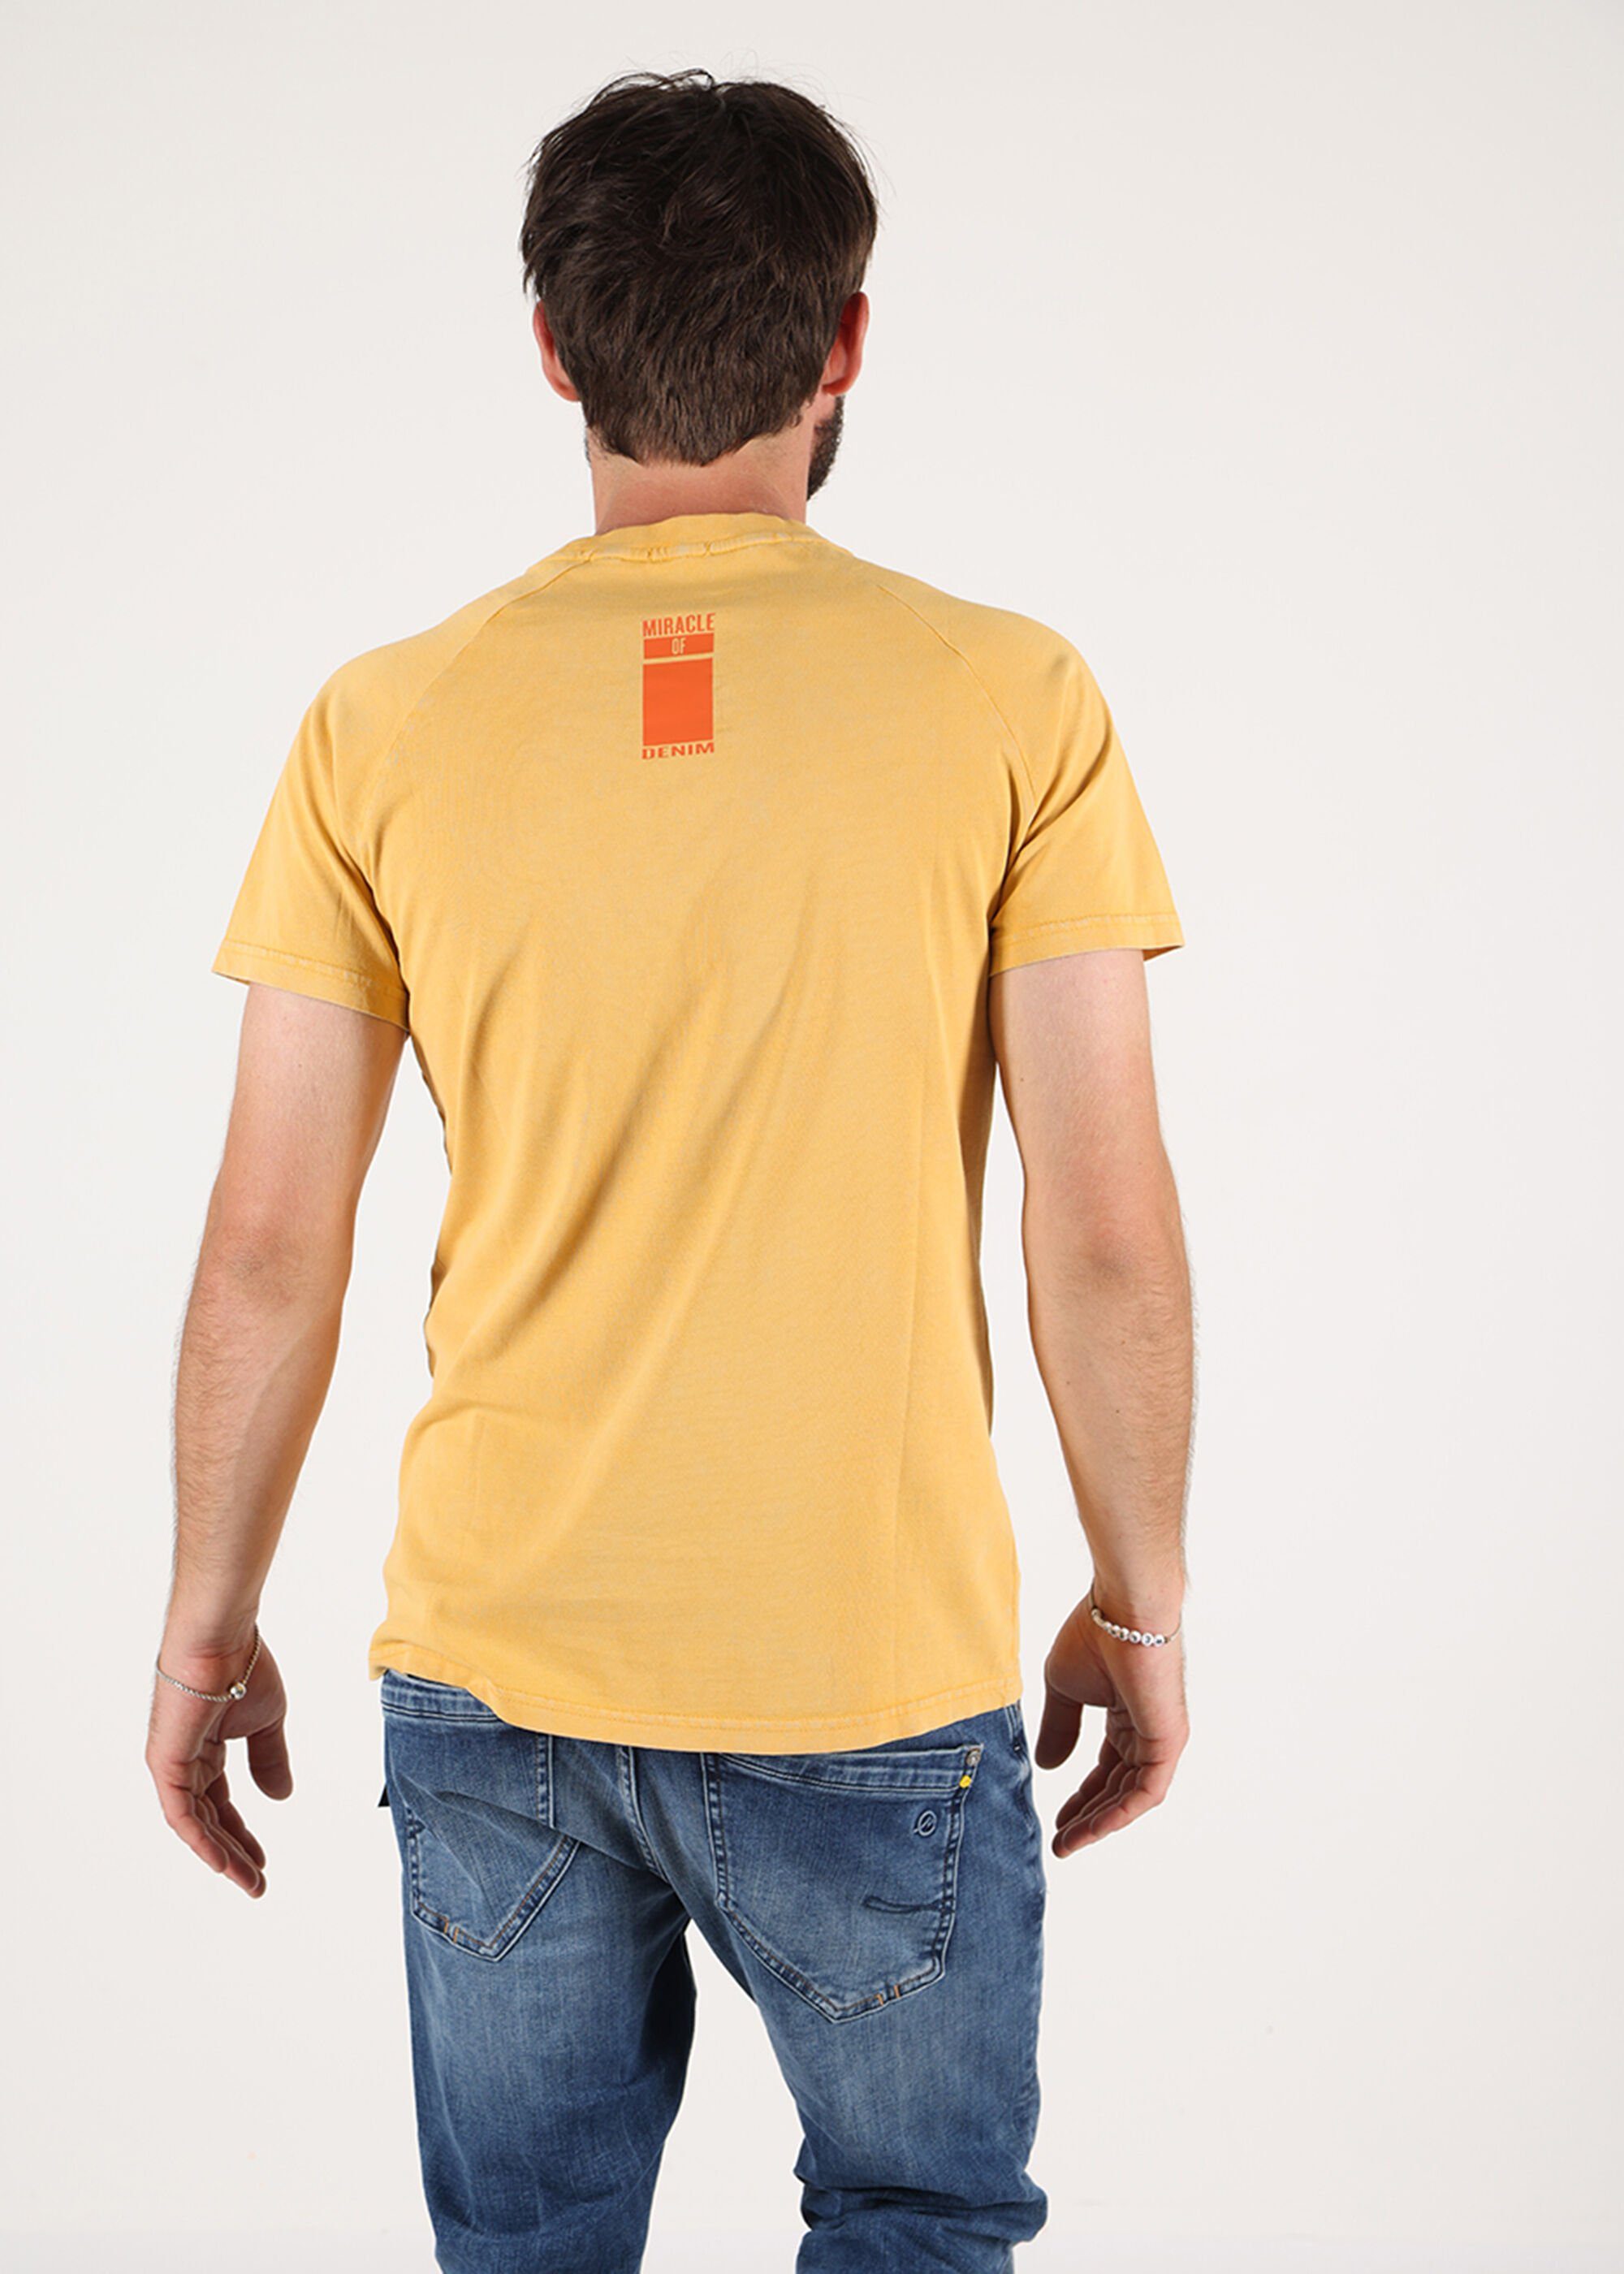 Yellow Miracle Banana of unifarbenen im Denim T-Shirt Design